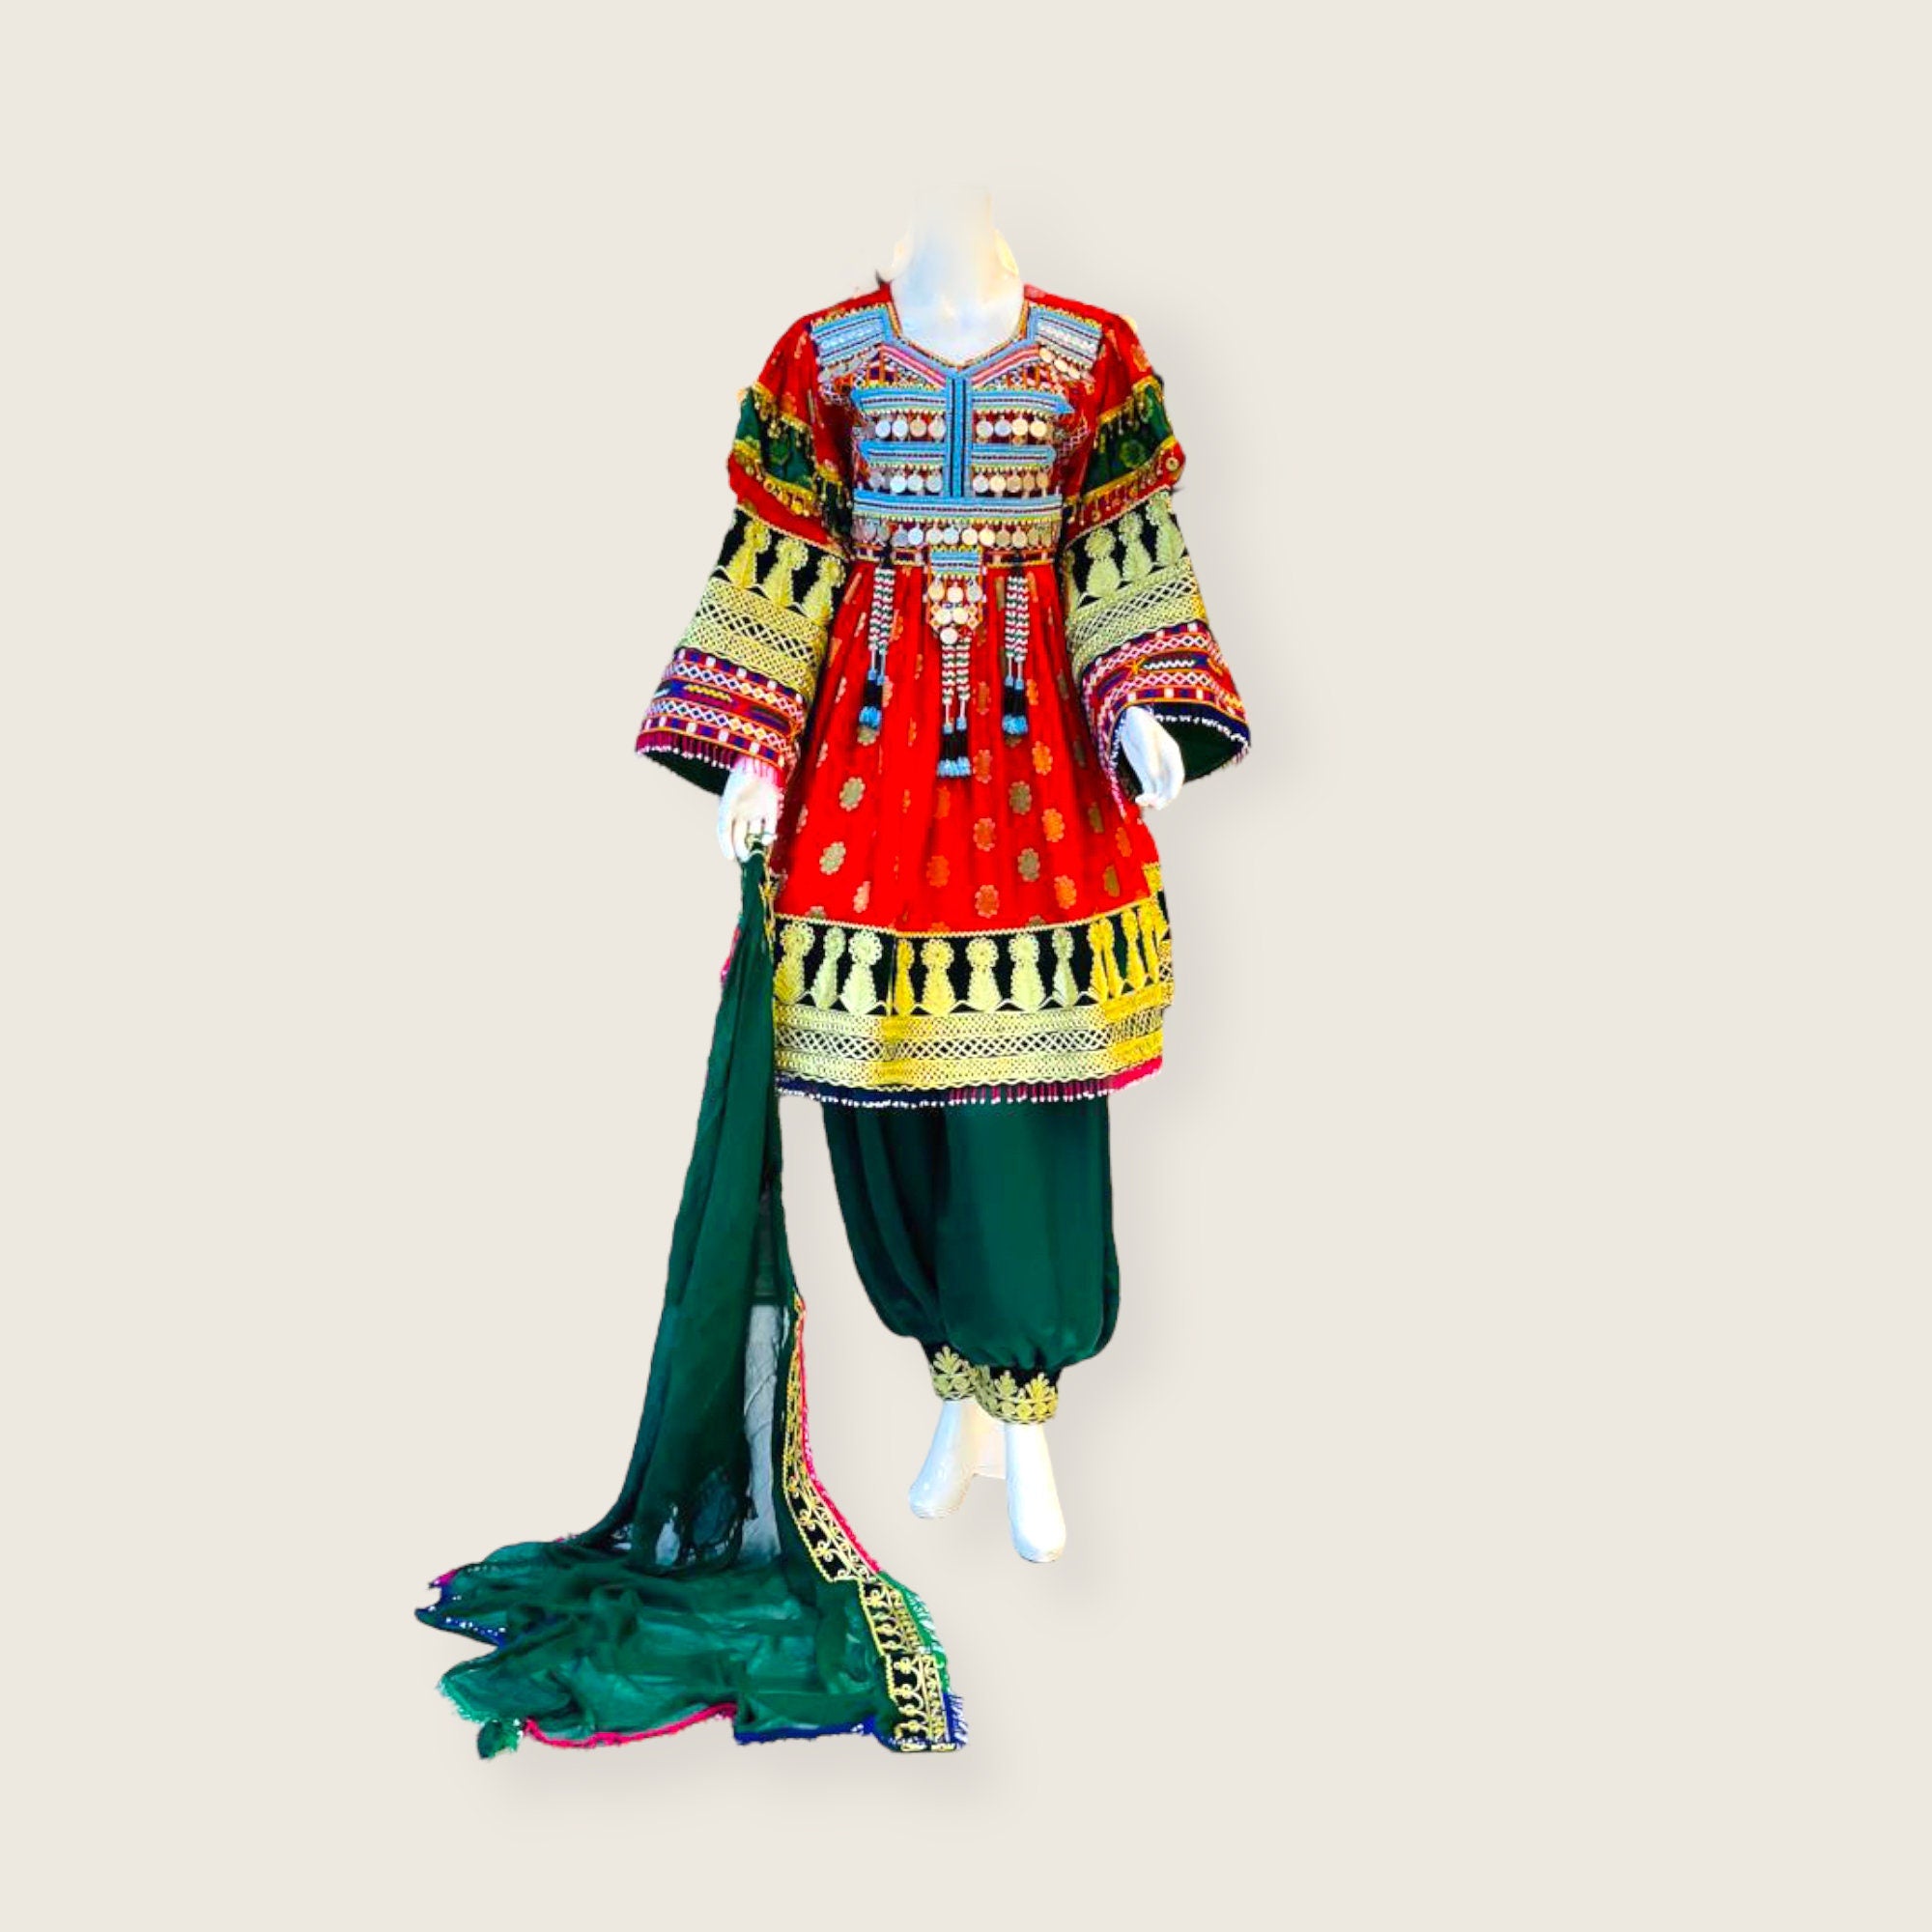 Green Vintage Afghan Clothes - Seengar.com - Seengar Fashion